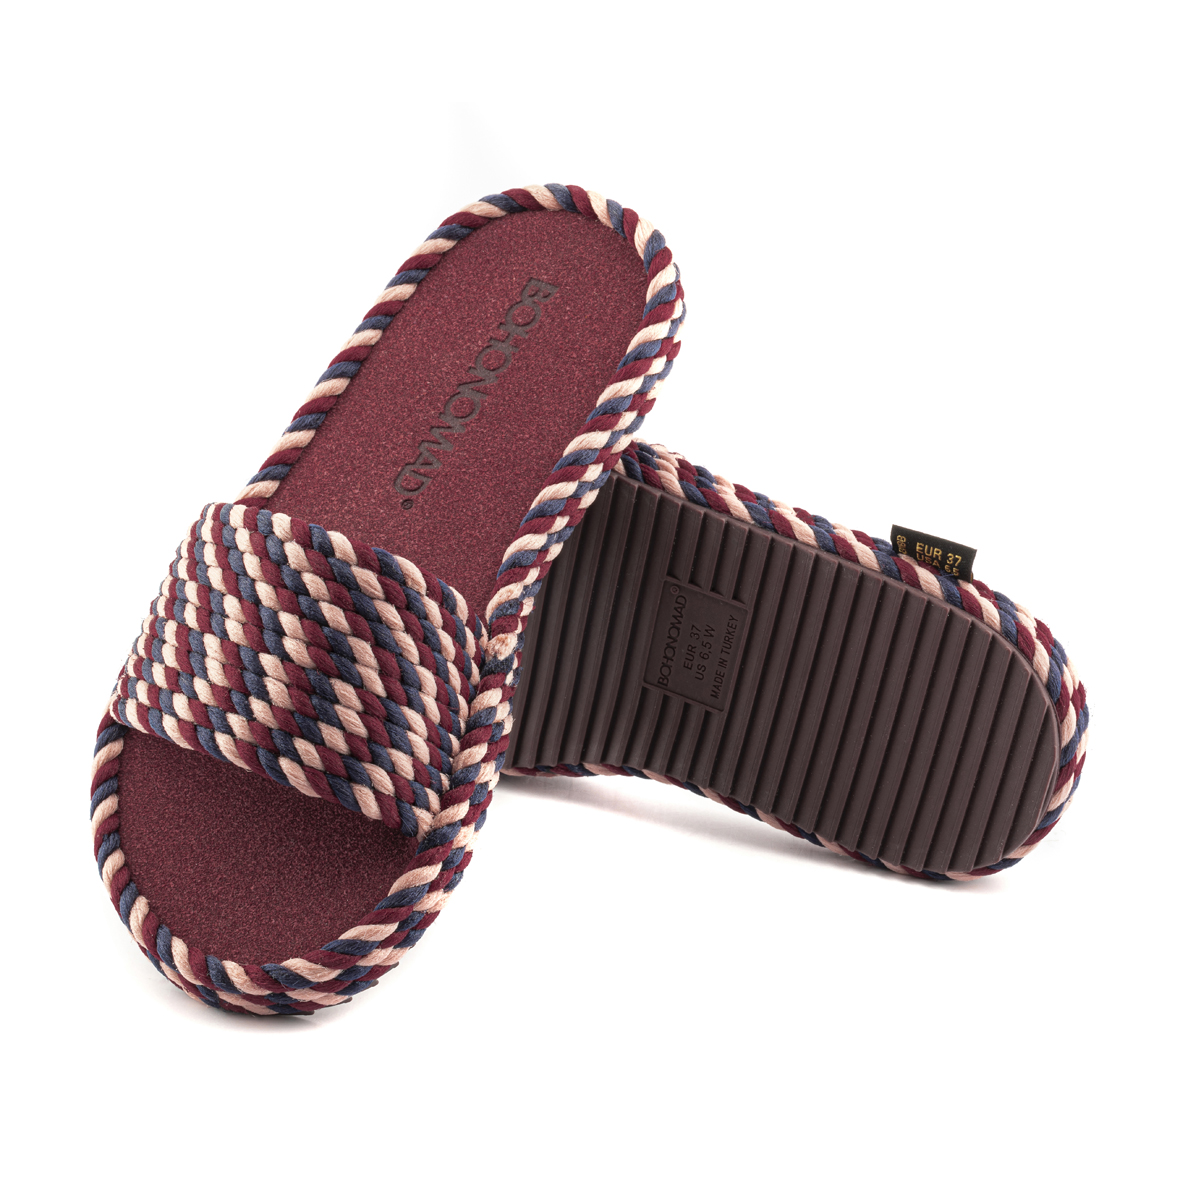 St.Tropez Women Memory Foam Rope Slipper – Tricolor ( Burgundy/Navy/Pink )